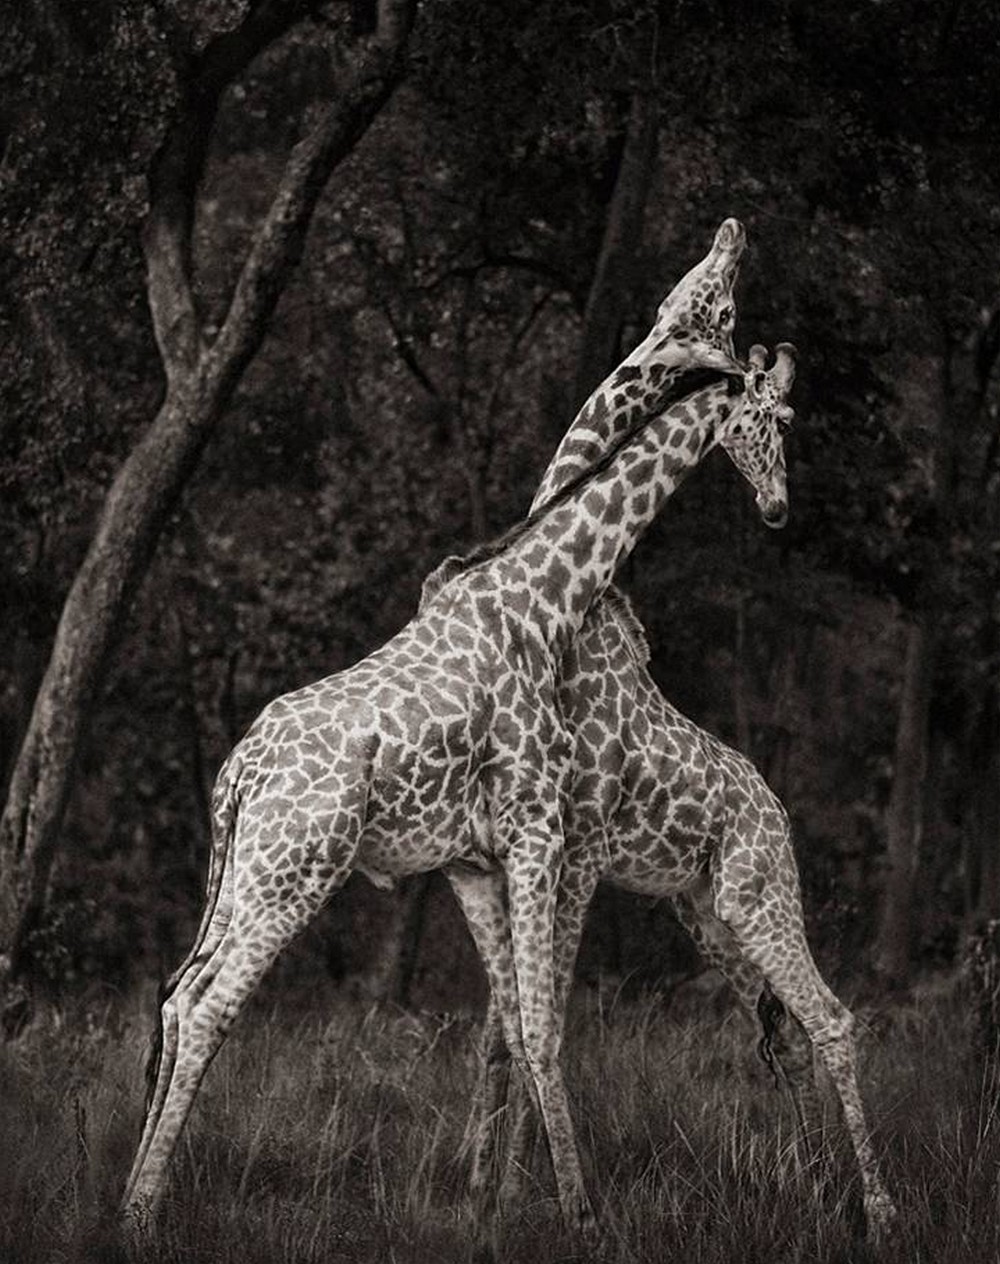 
	Жирафы дерутся шеями / ©Flickr